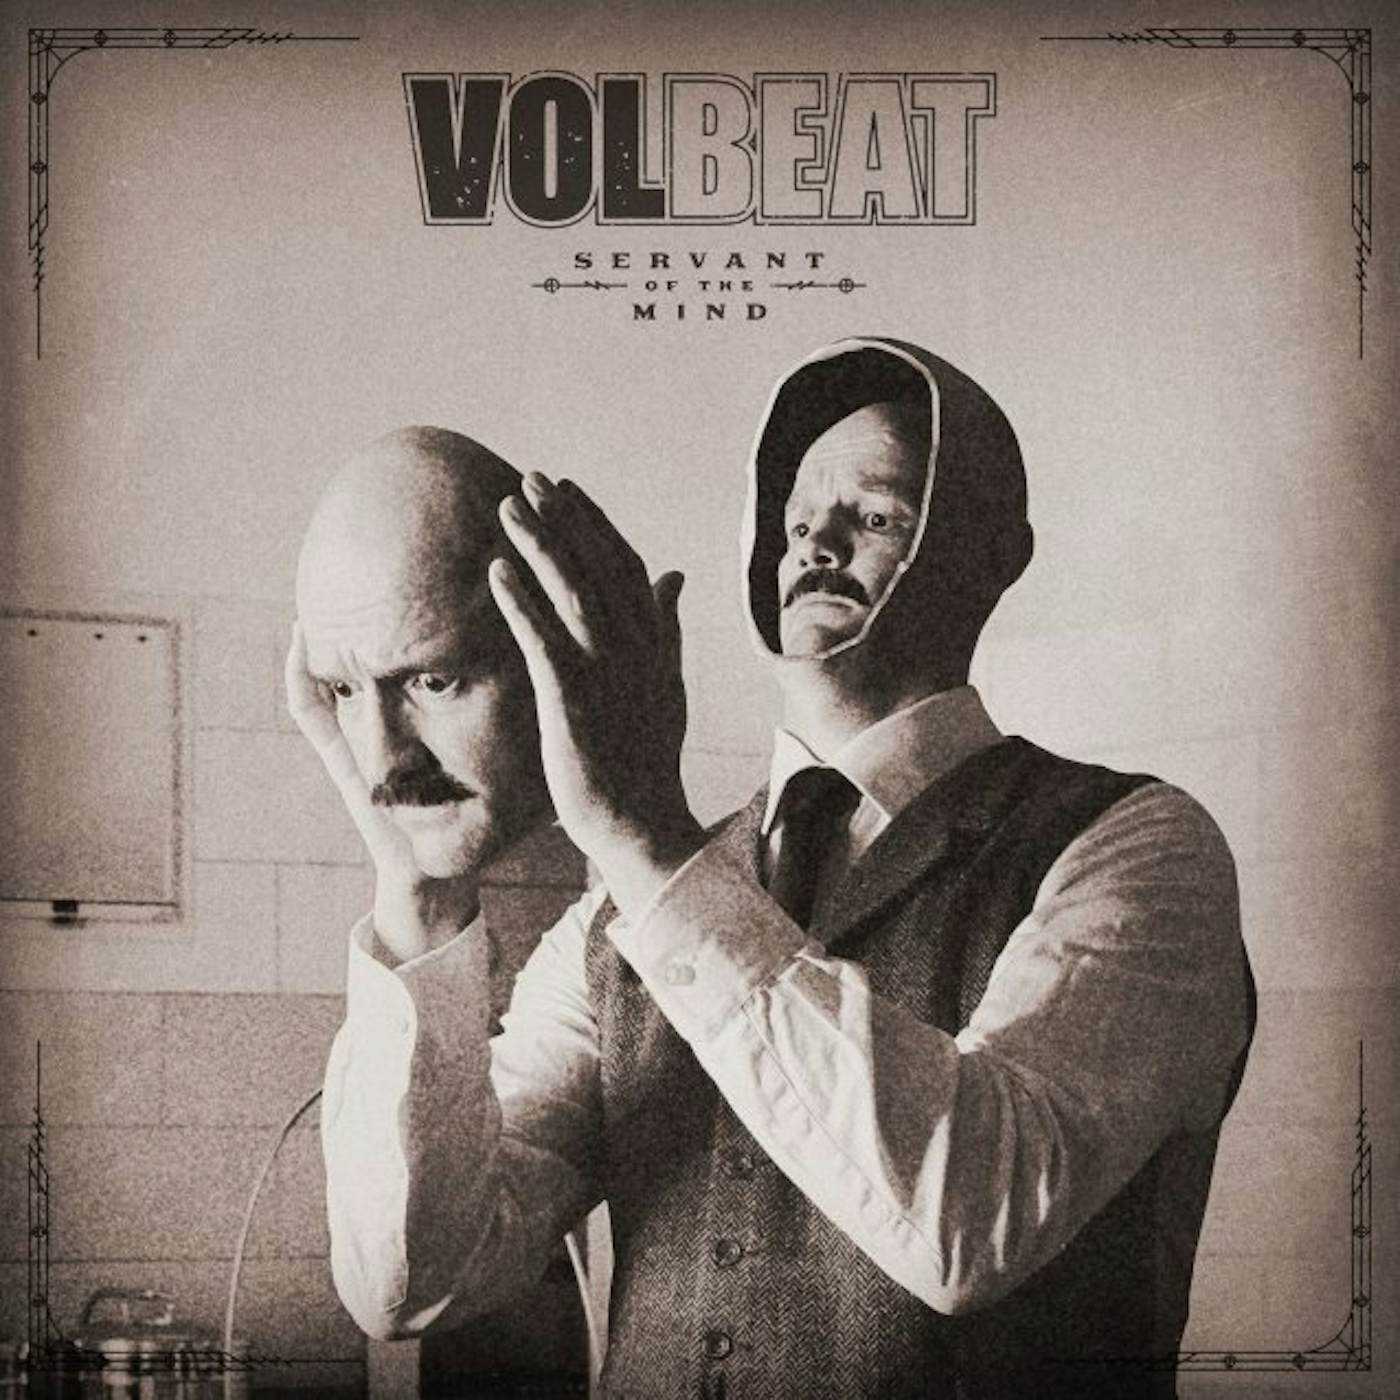 Volbeat Servant Of The Mind Vinyl Record